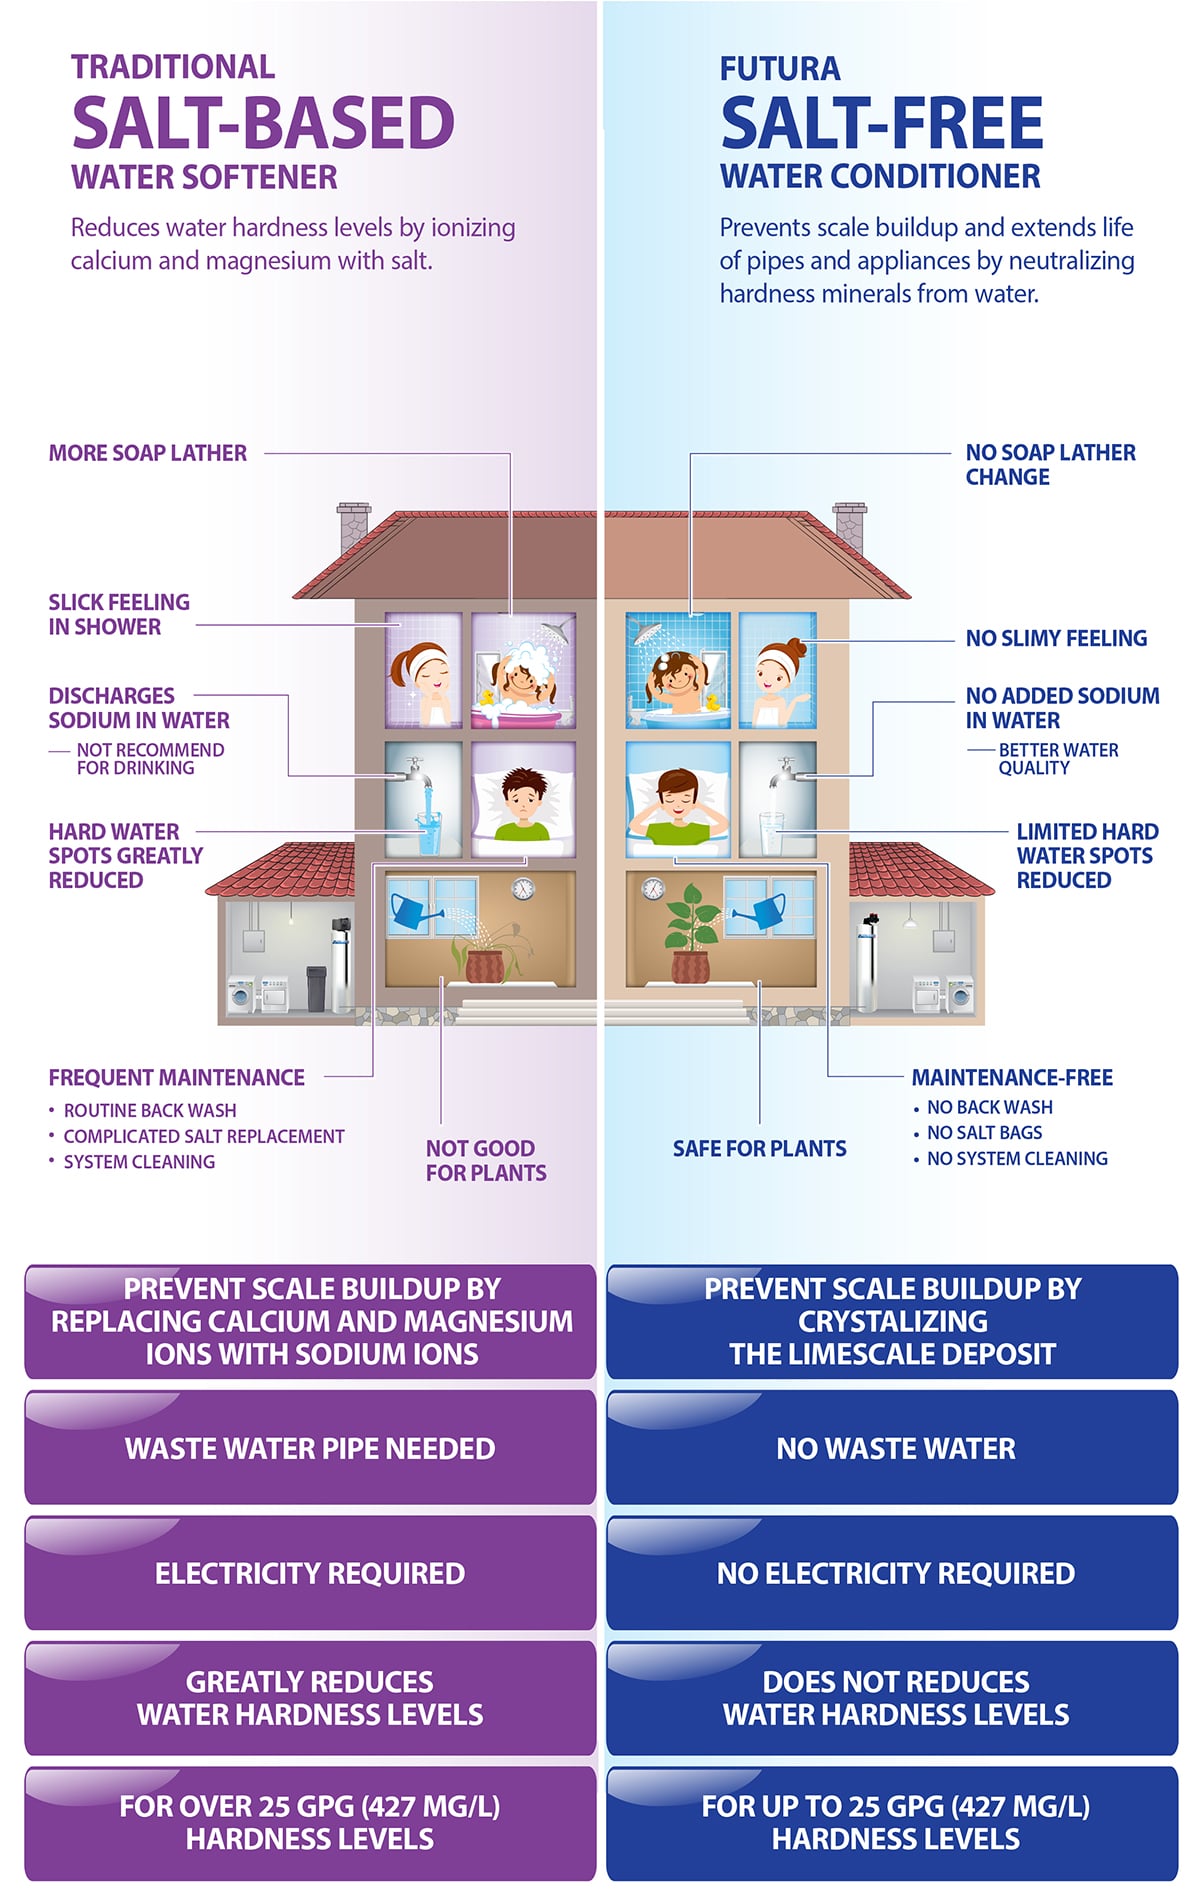 water softener vs water conditioner comparison image mobile